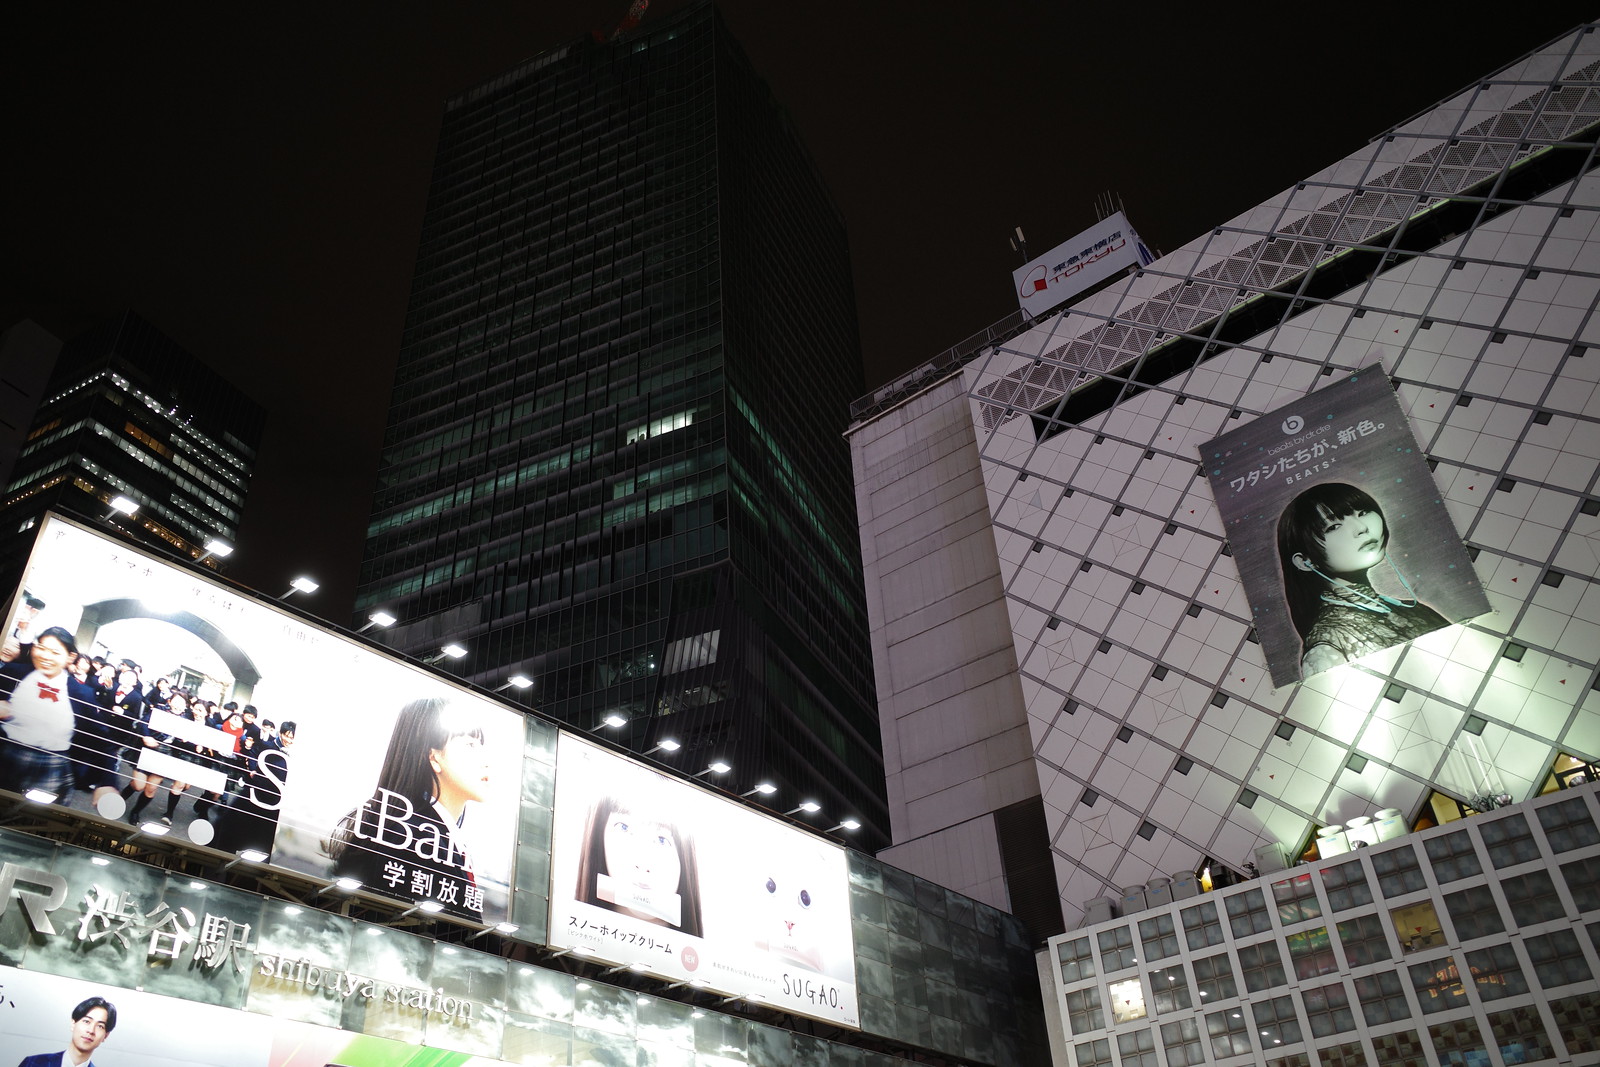 GR III - Shibuya Night